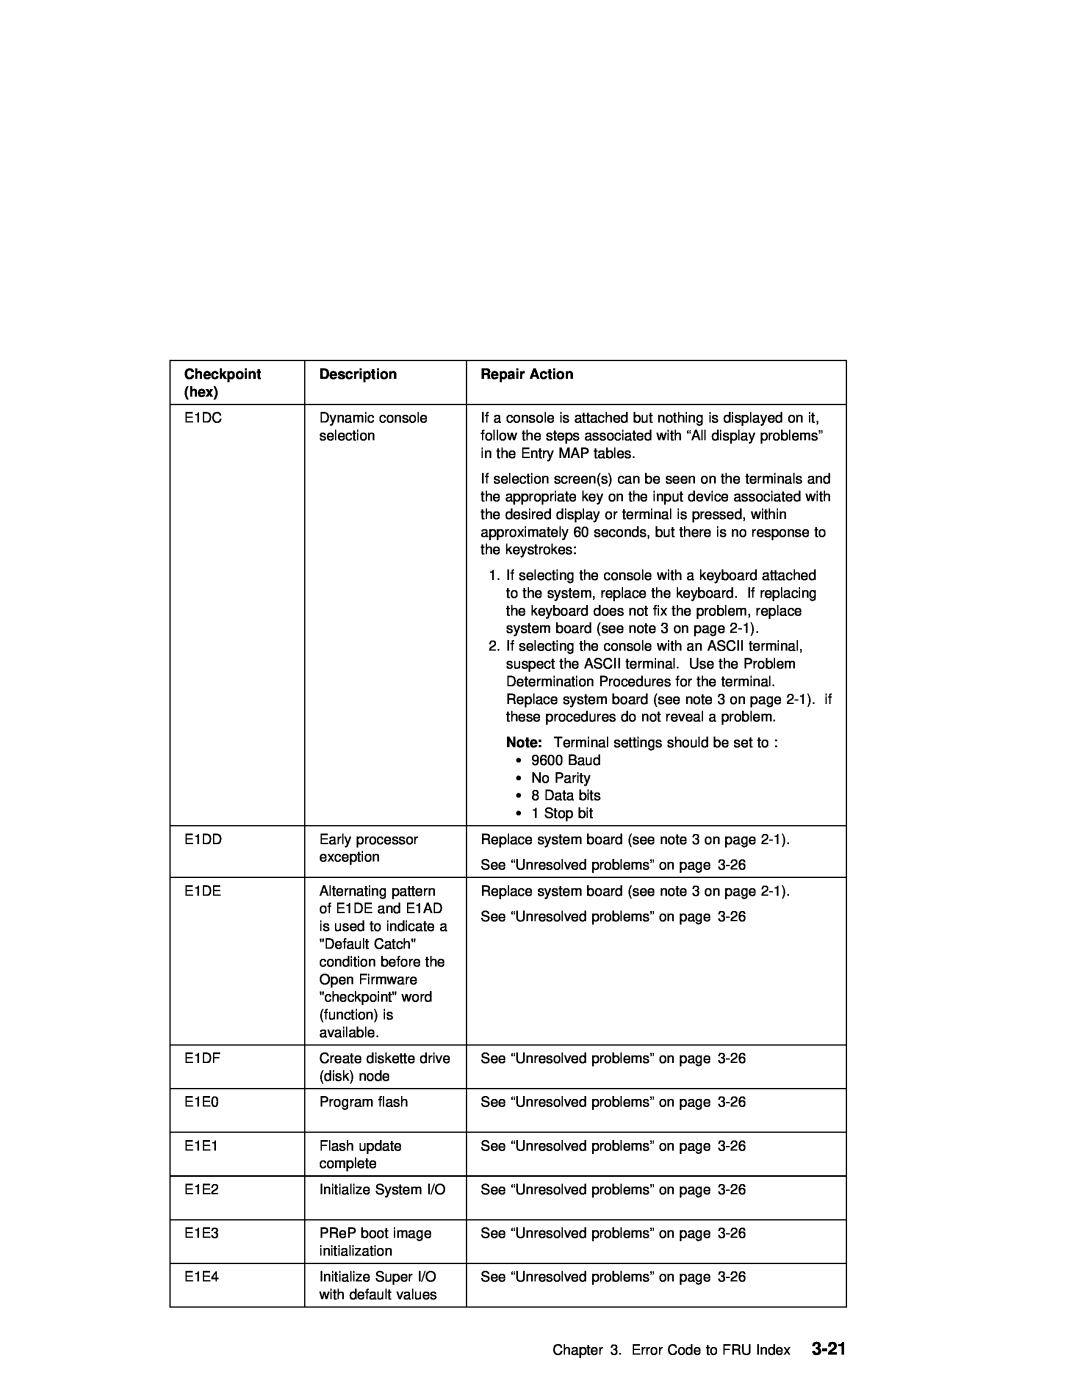 IBM B50 manual 3-21, Checkpoint, Description, Repair Action 